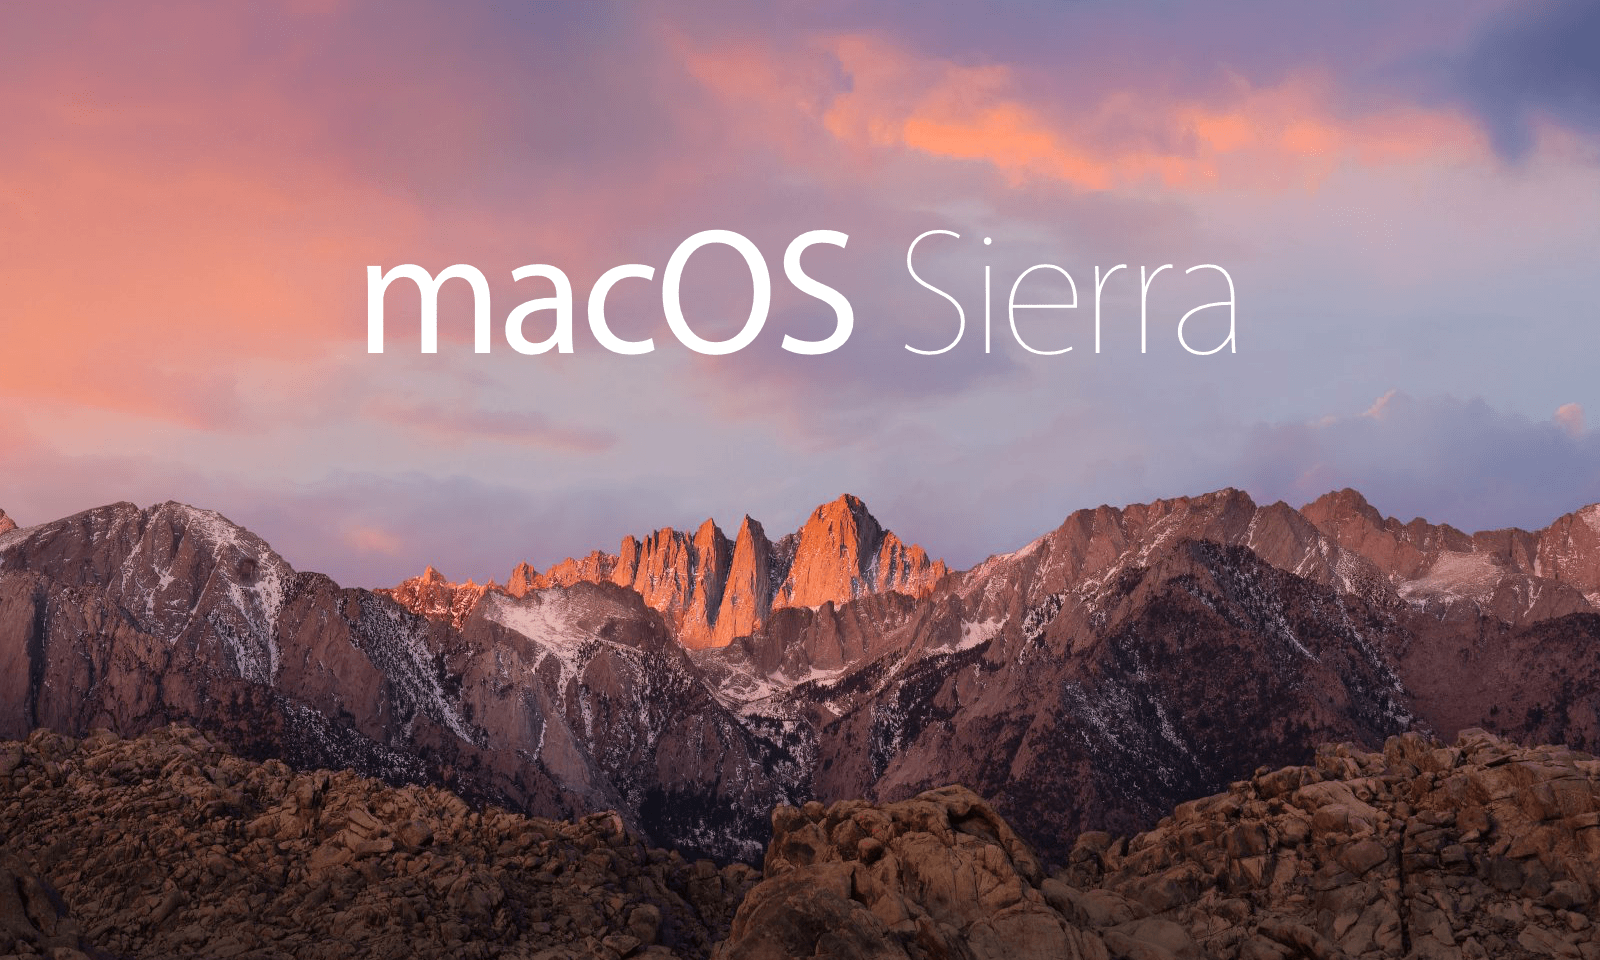 Nikon software for mac os sierra